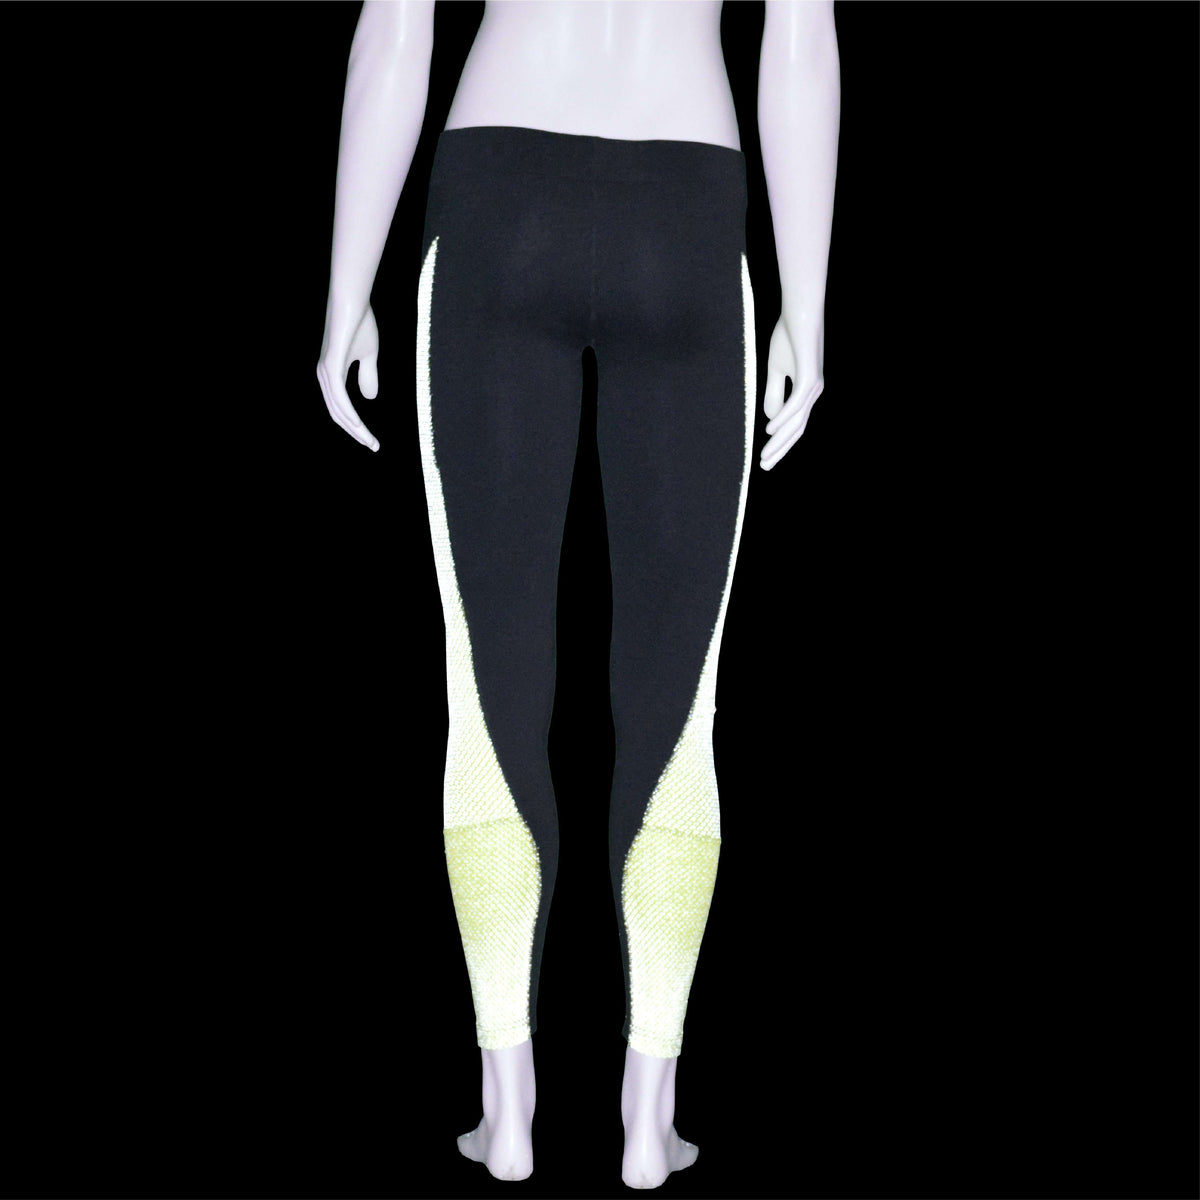 illumiNITE Women's Reflective Powerstretch Pant in Black